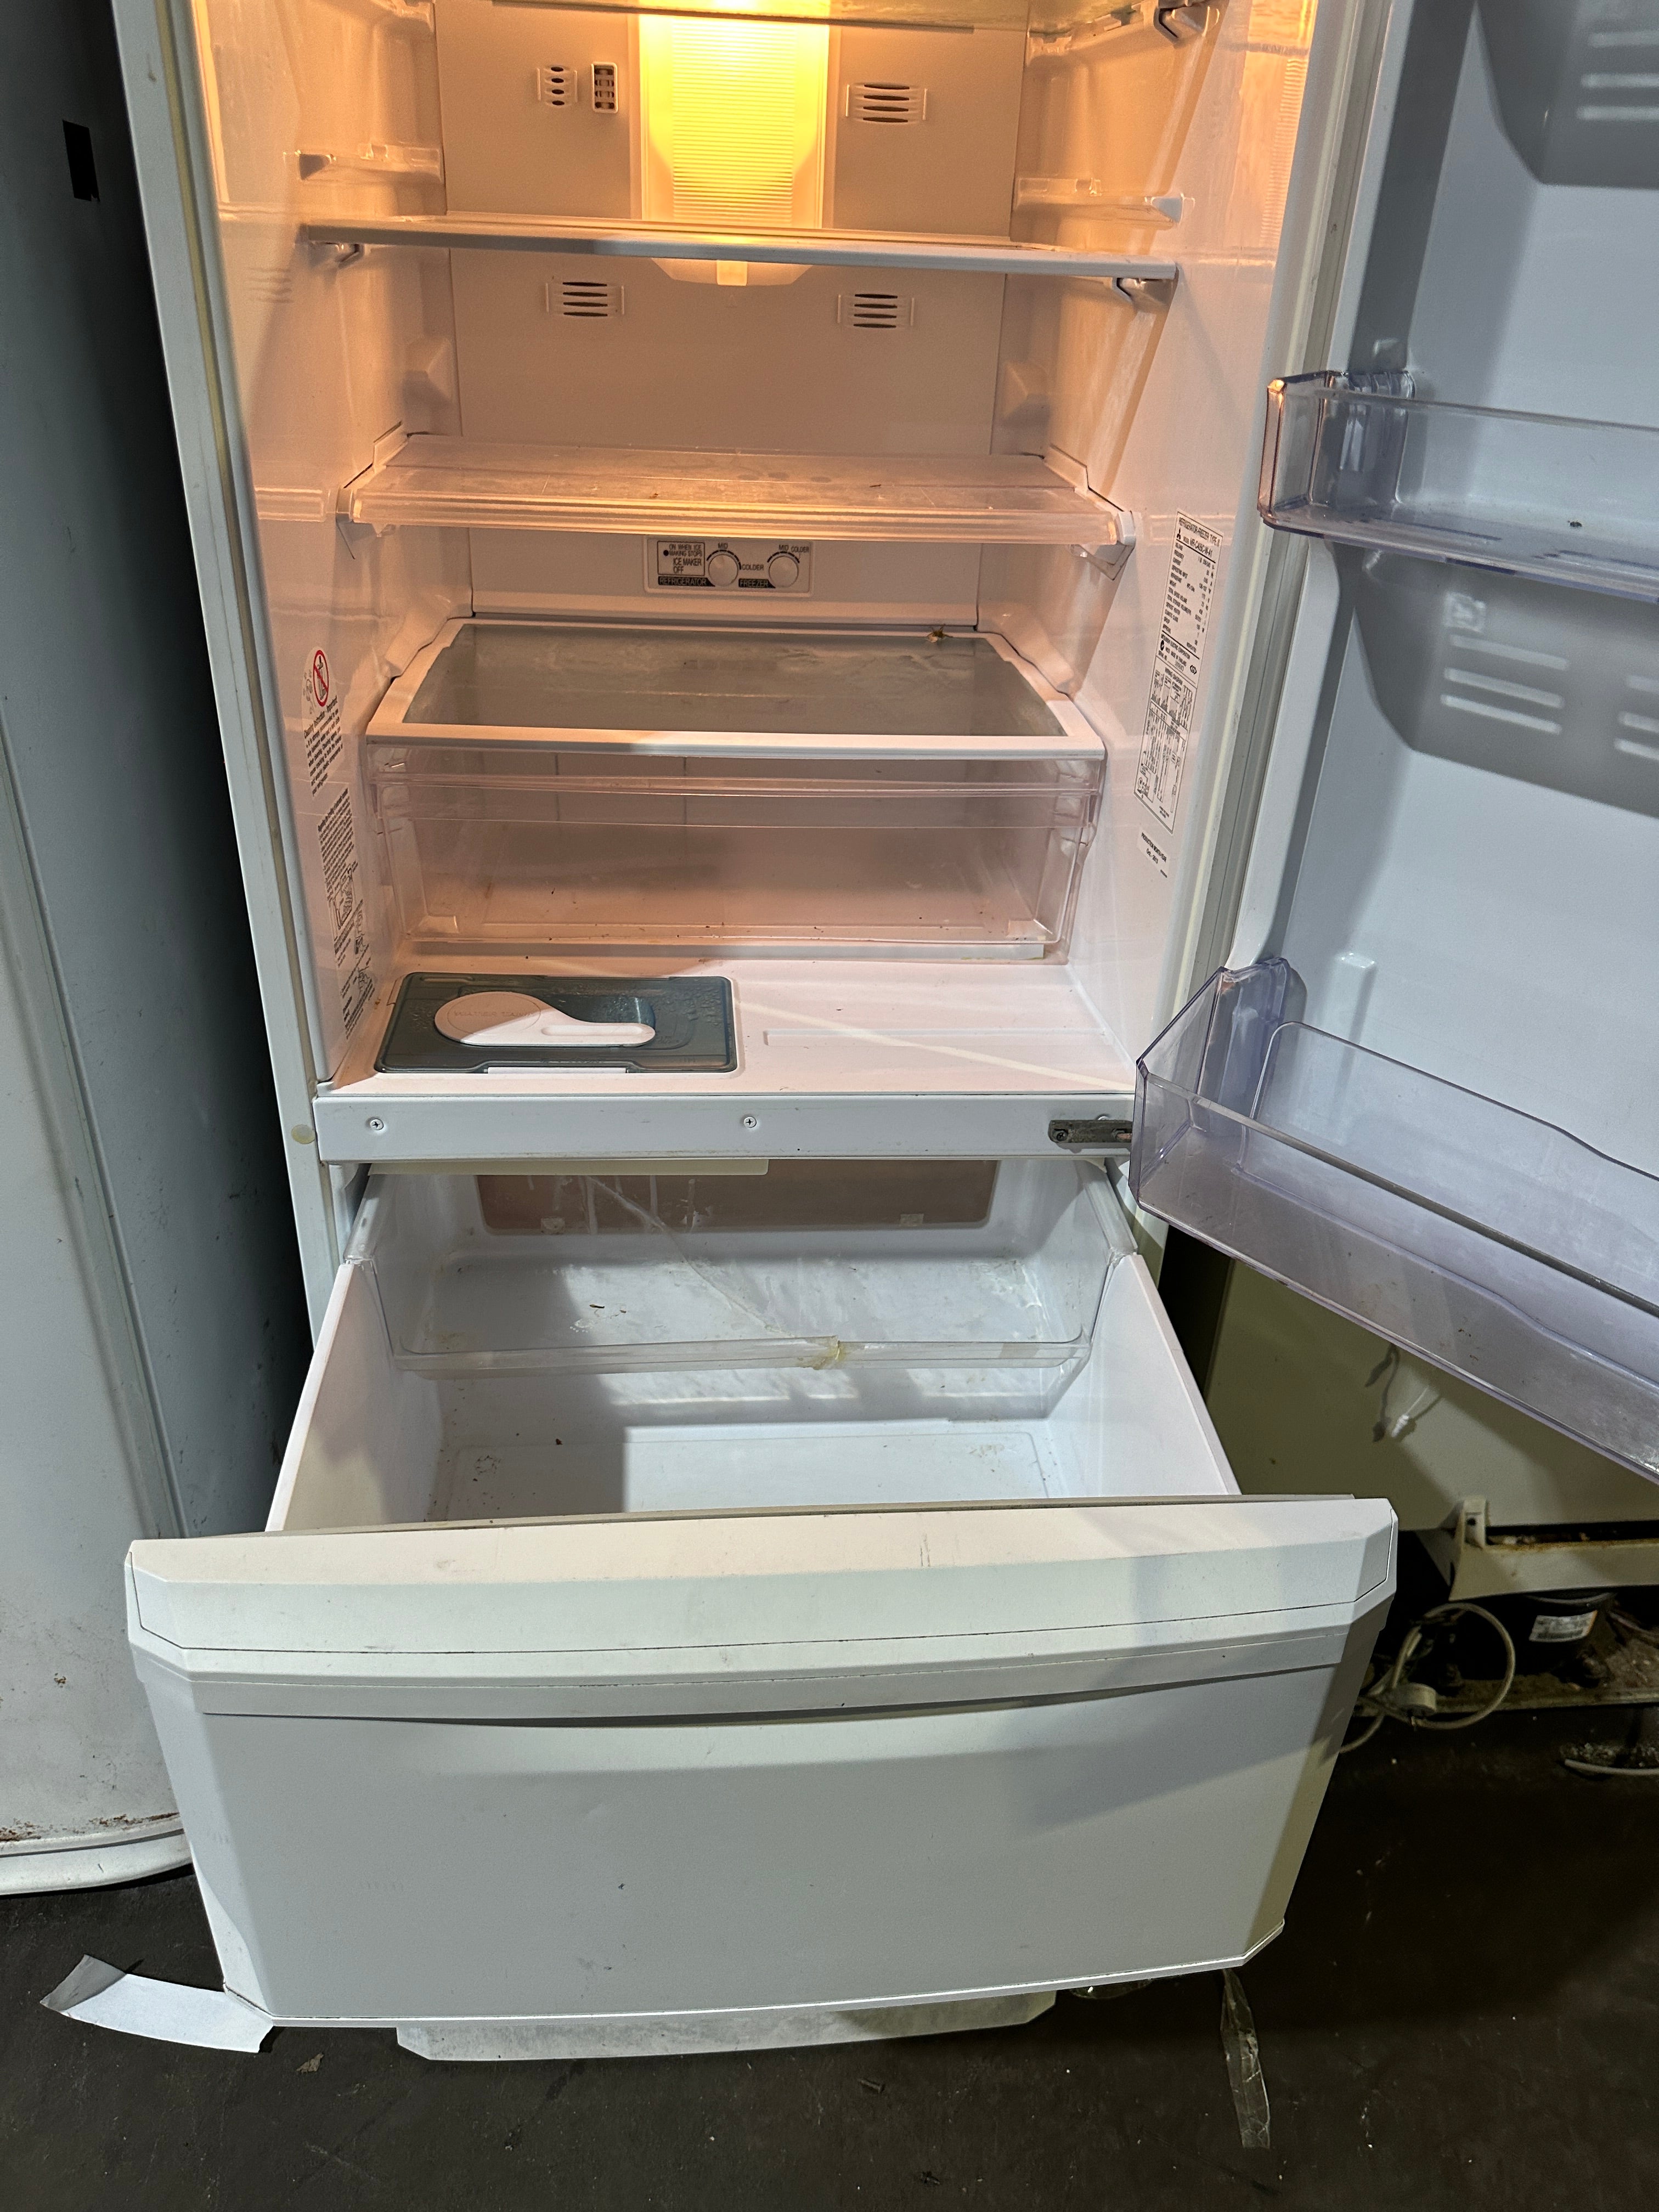 MR-C405C-W-A1 Mitsubishi 406 L bottom mount fridge freezer